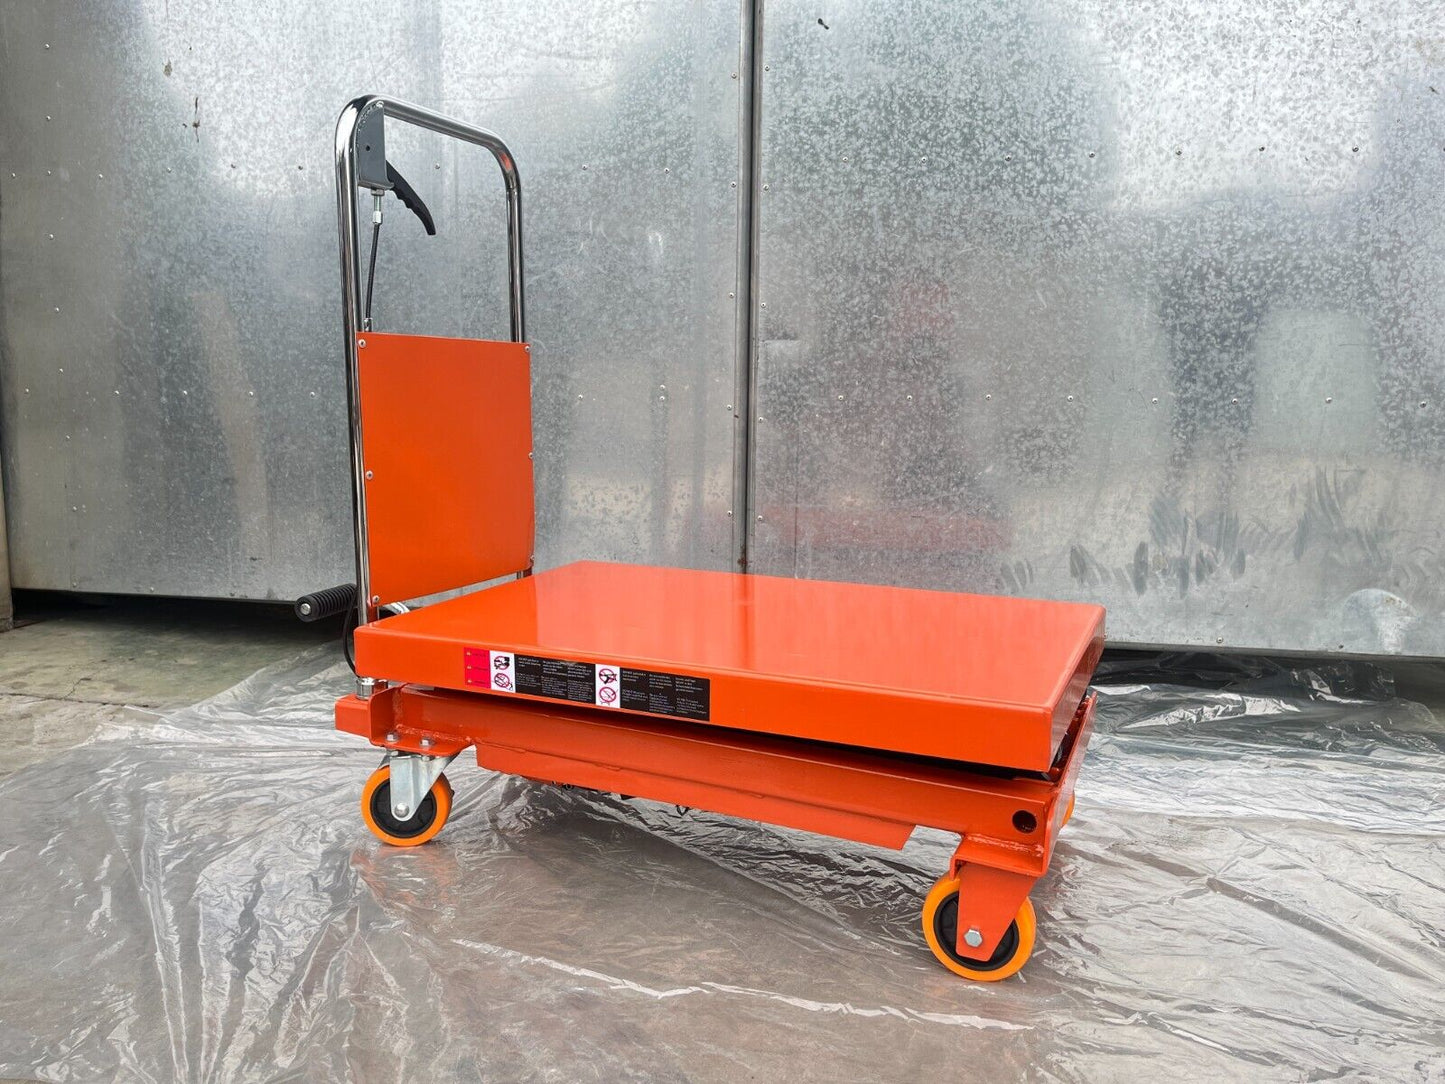 KATOOL Hydraulic Lift Table Cart 330 lbs Manual Scissor Lift Table